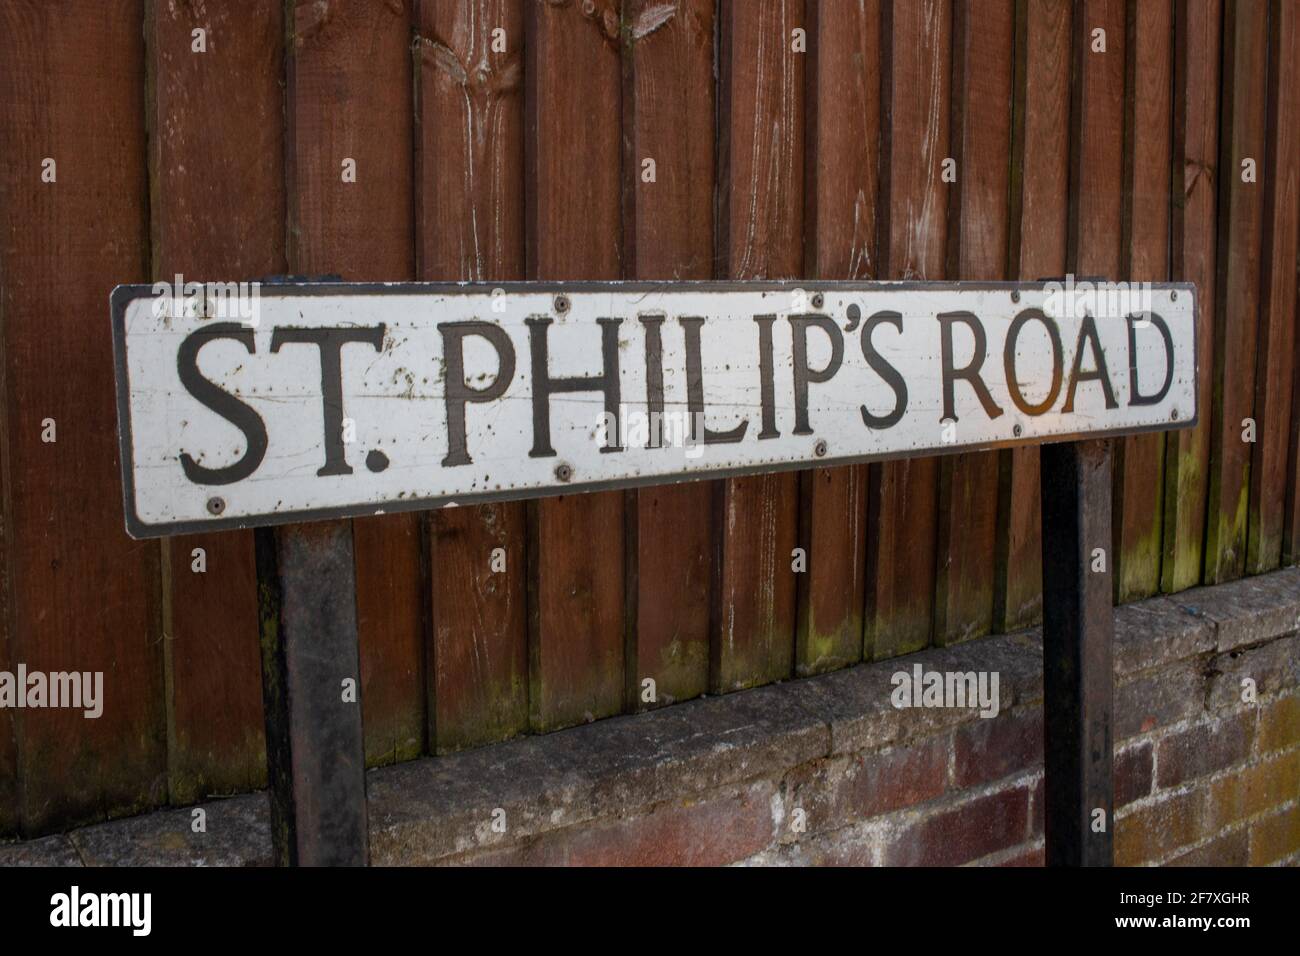 Street sign for St Philip's Road, Romsey, Cambridge, UK Stock Photo